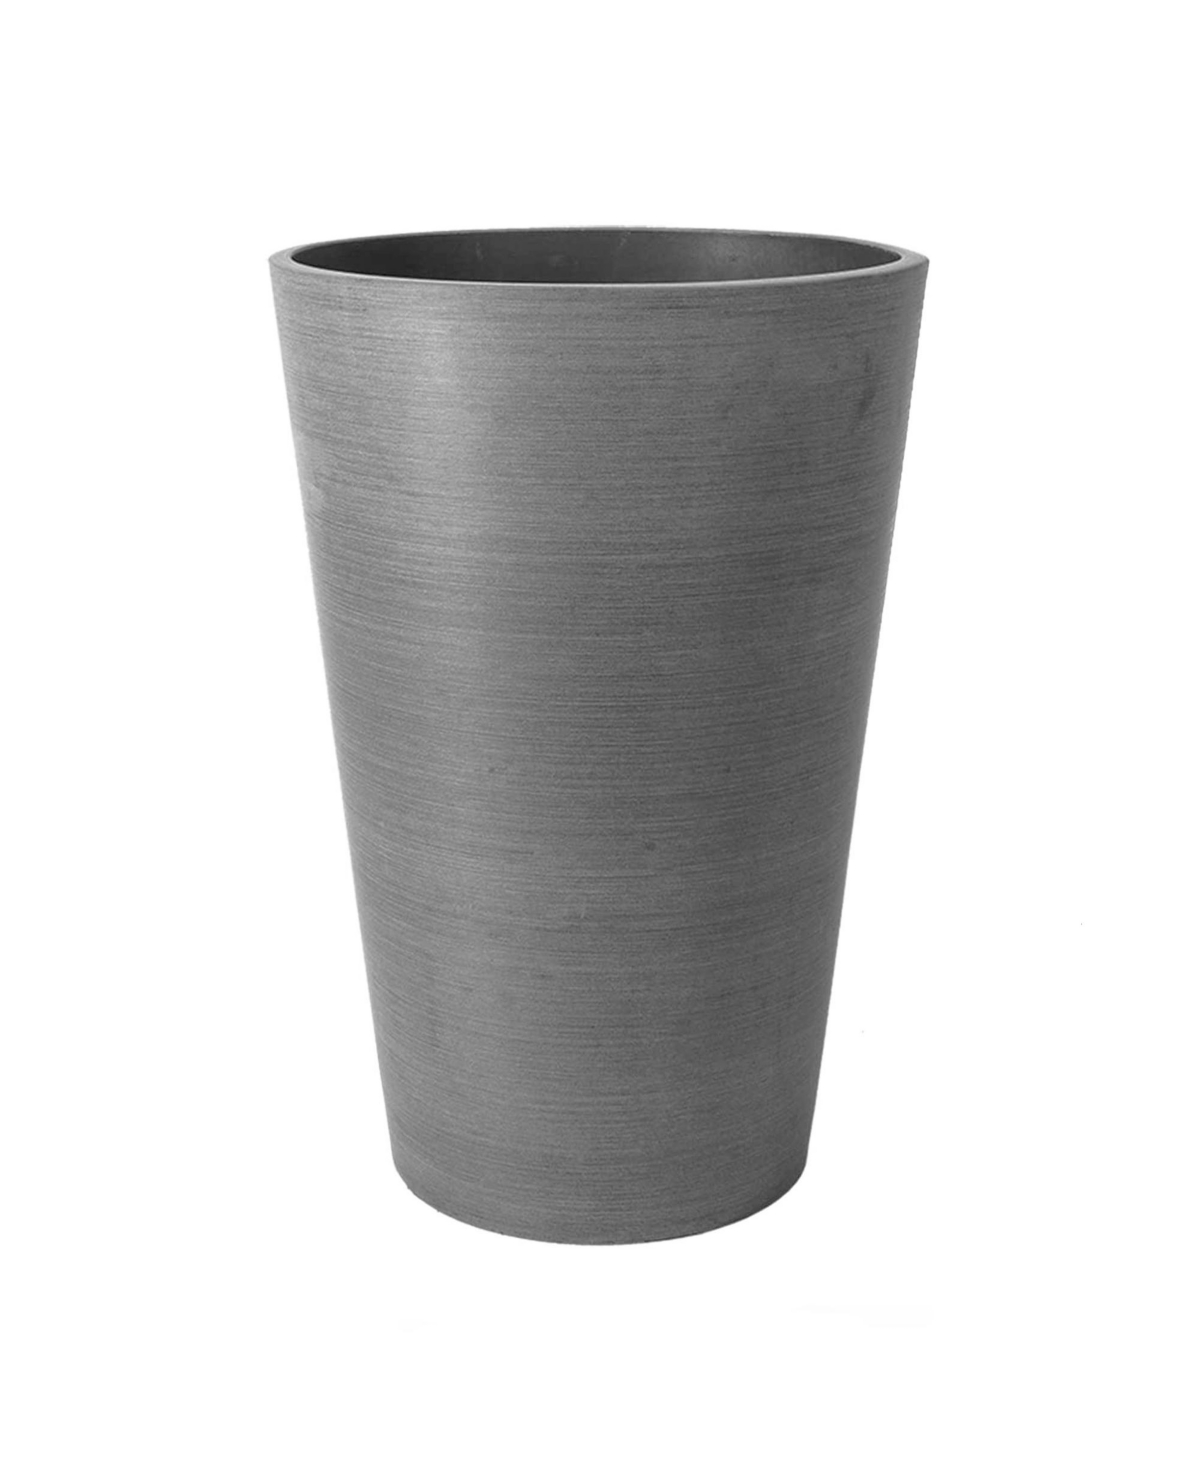 Algreen 16230 Valencia Round Planter Pot Textured Charcoal 18 Inch